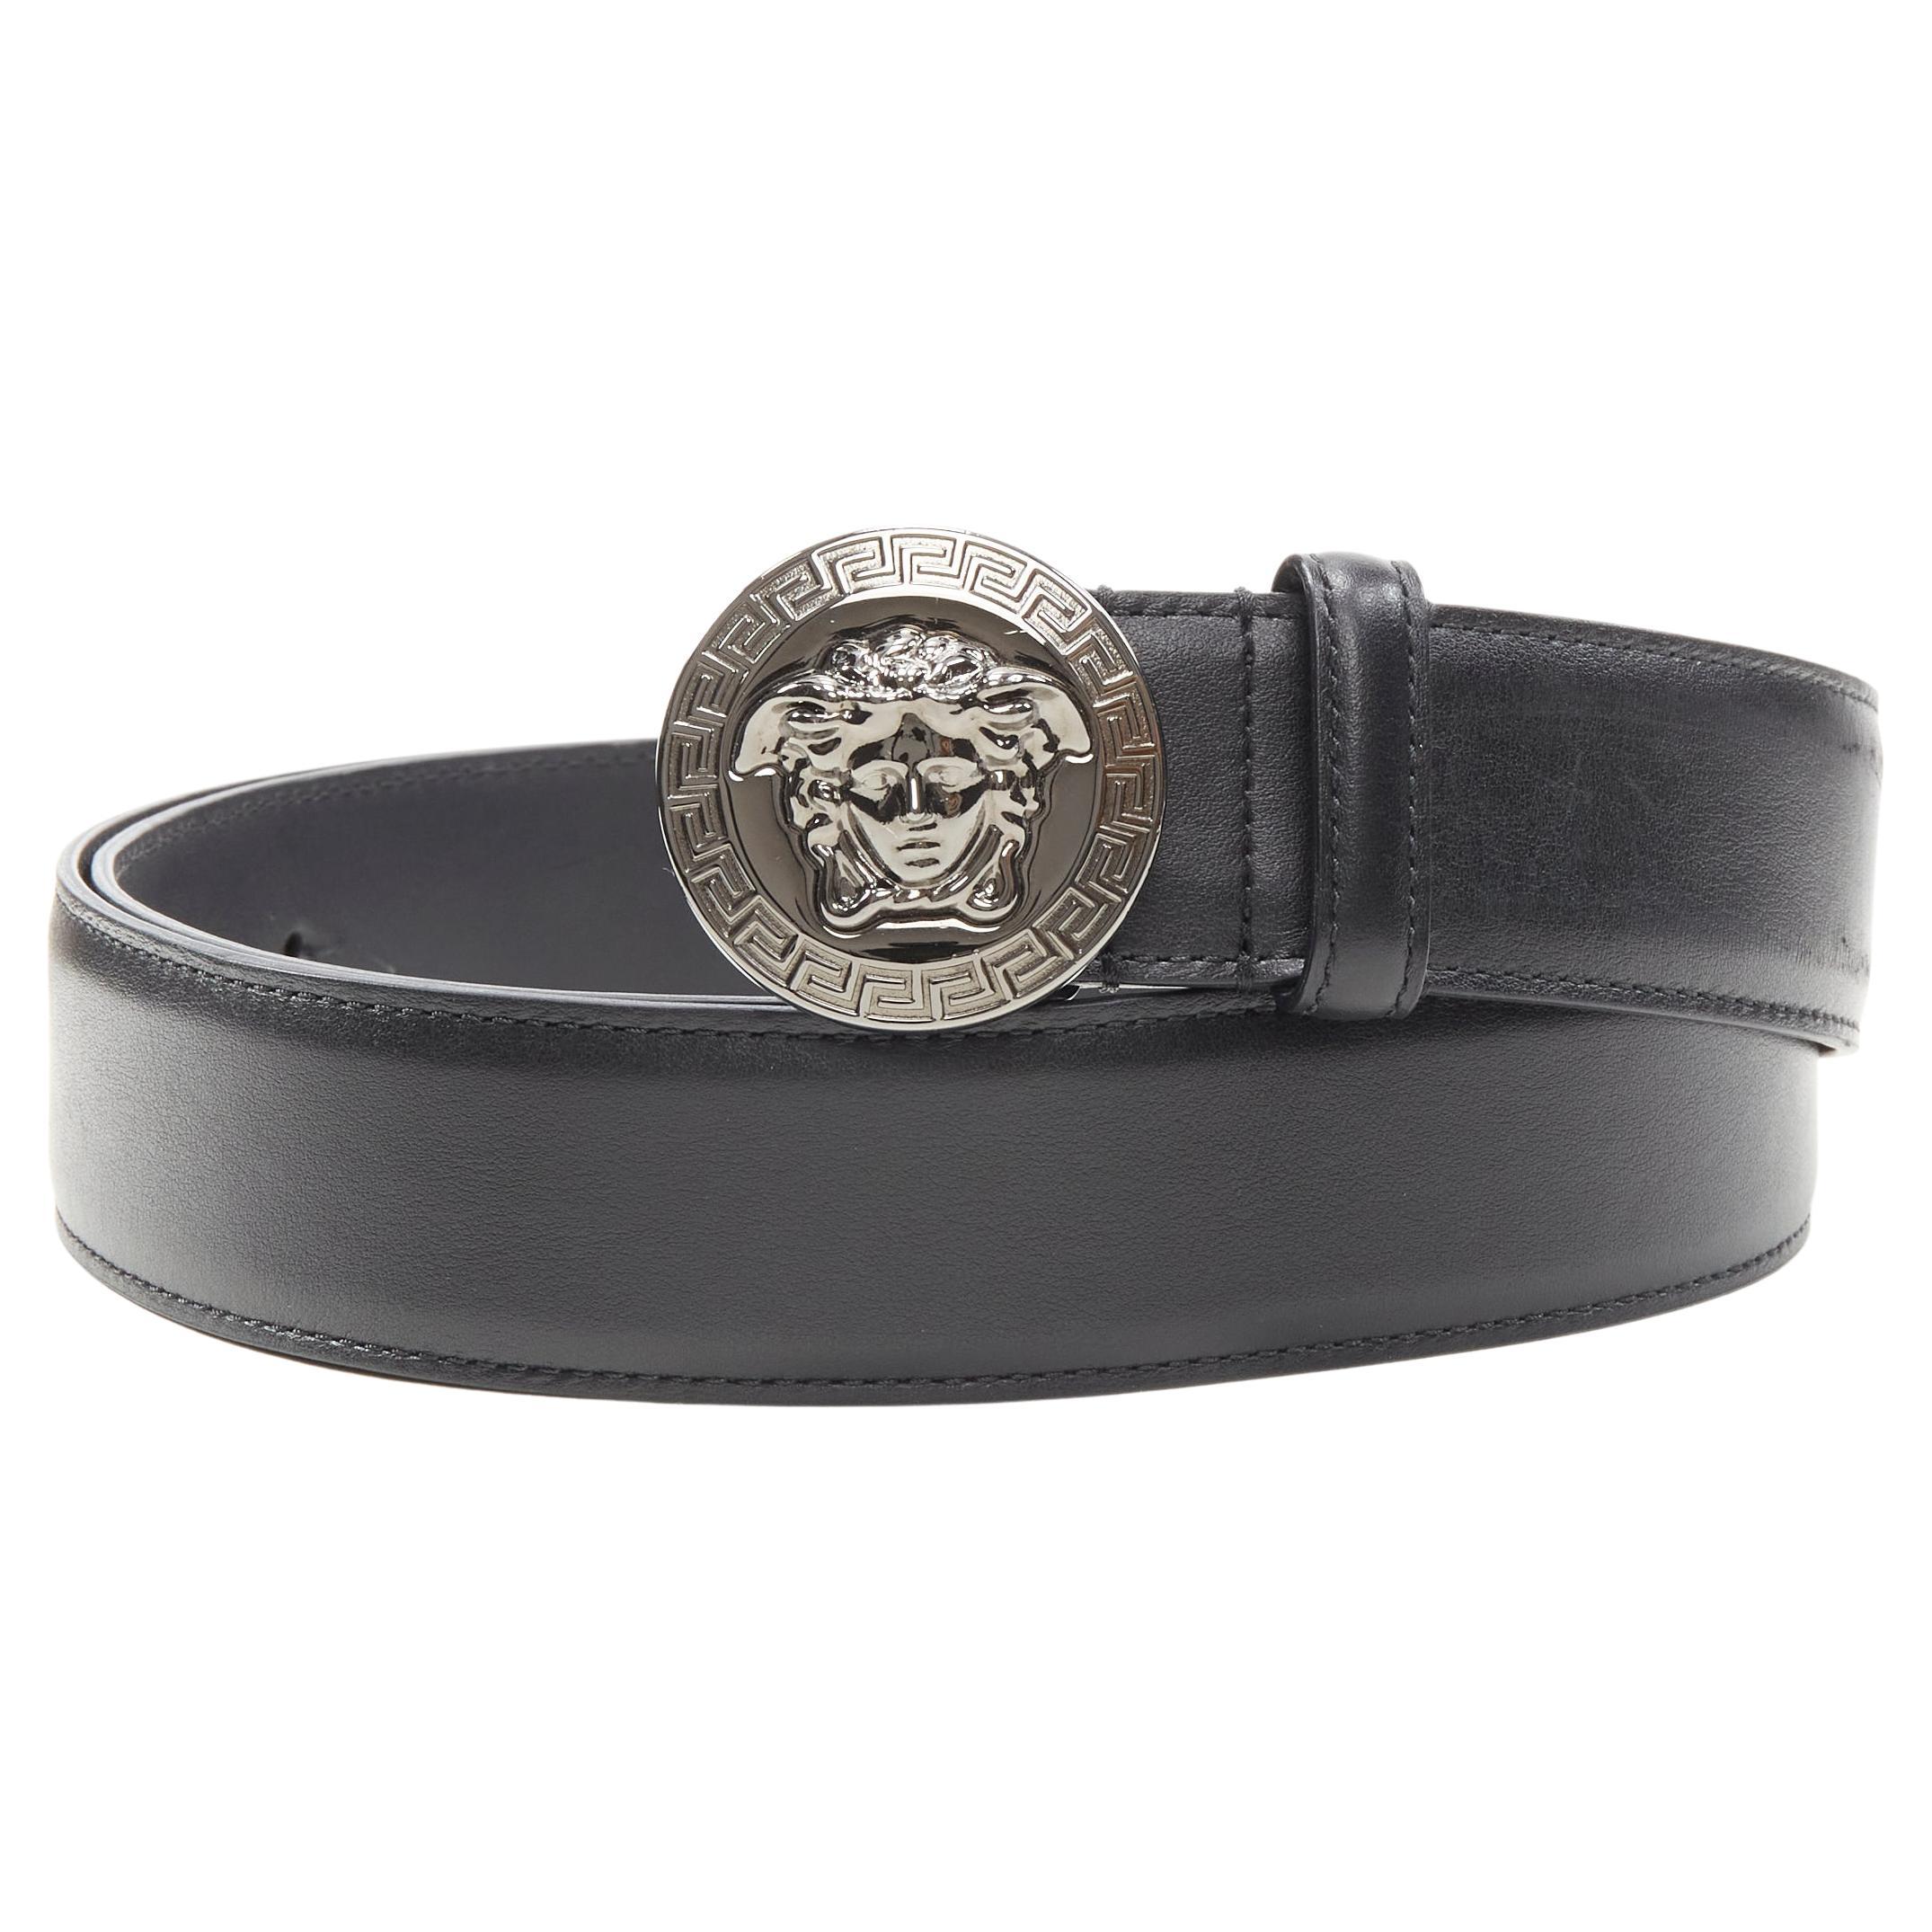 New Versace Medusa Medallion Coin Silver Buckle Black Leather Belt 115cm 44-48